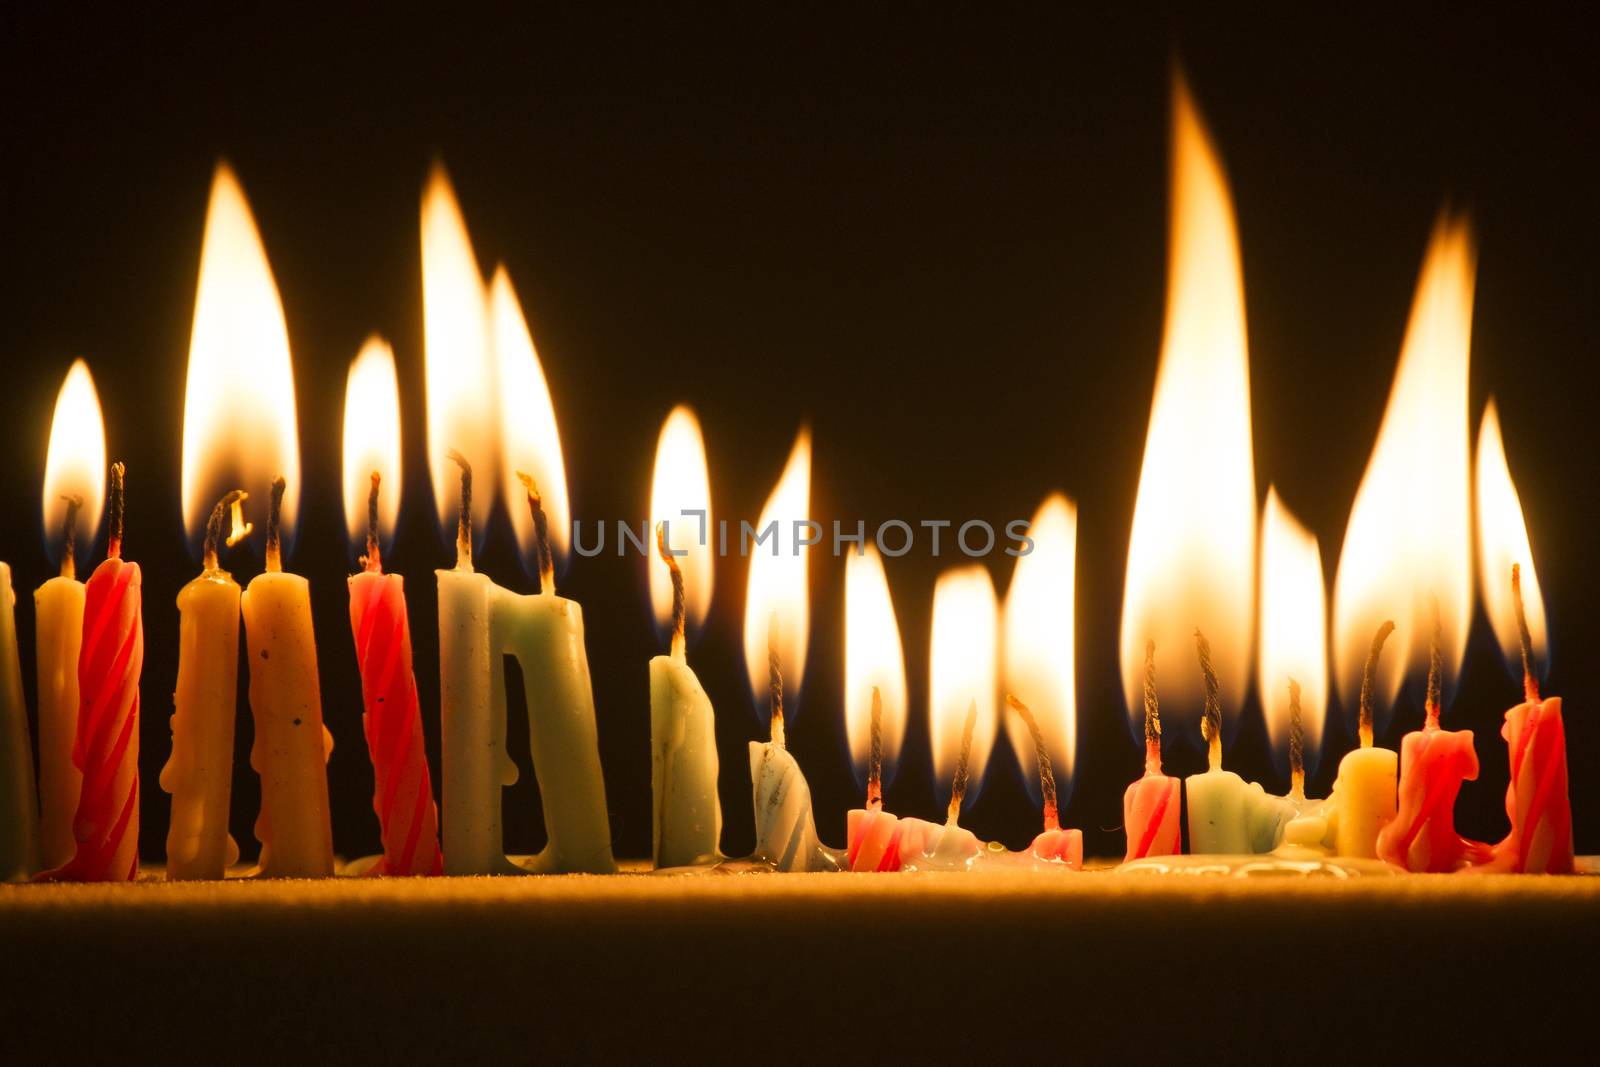 Small candles lit by fotografiche.eu